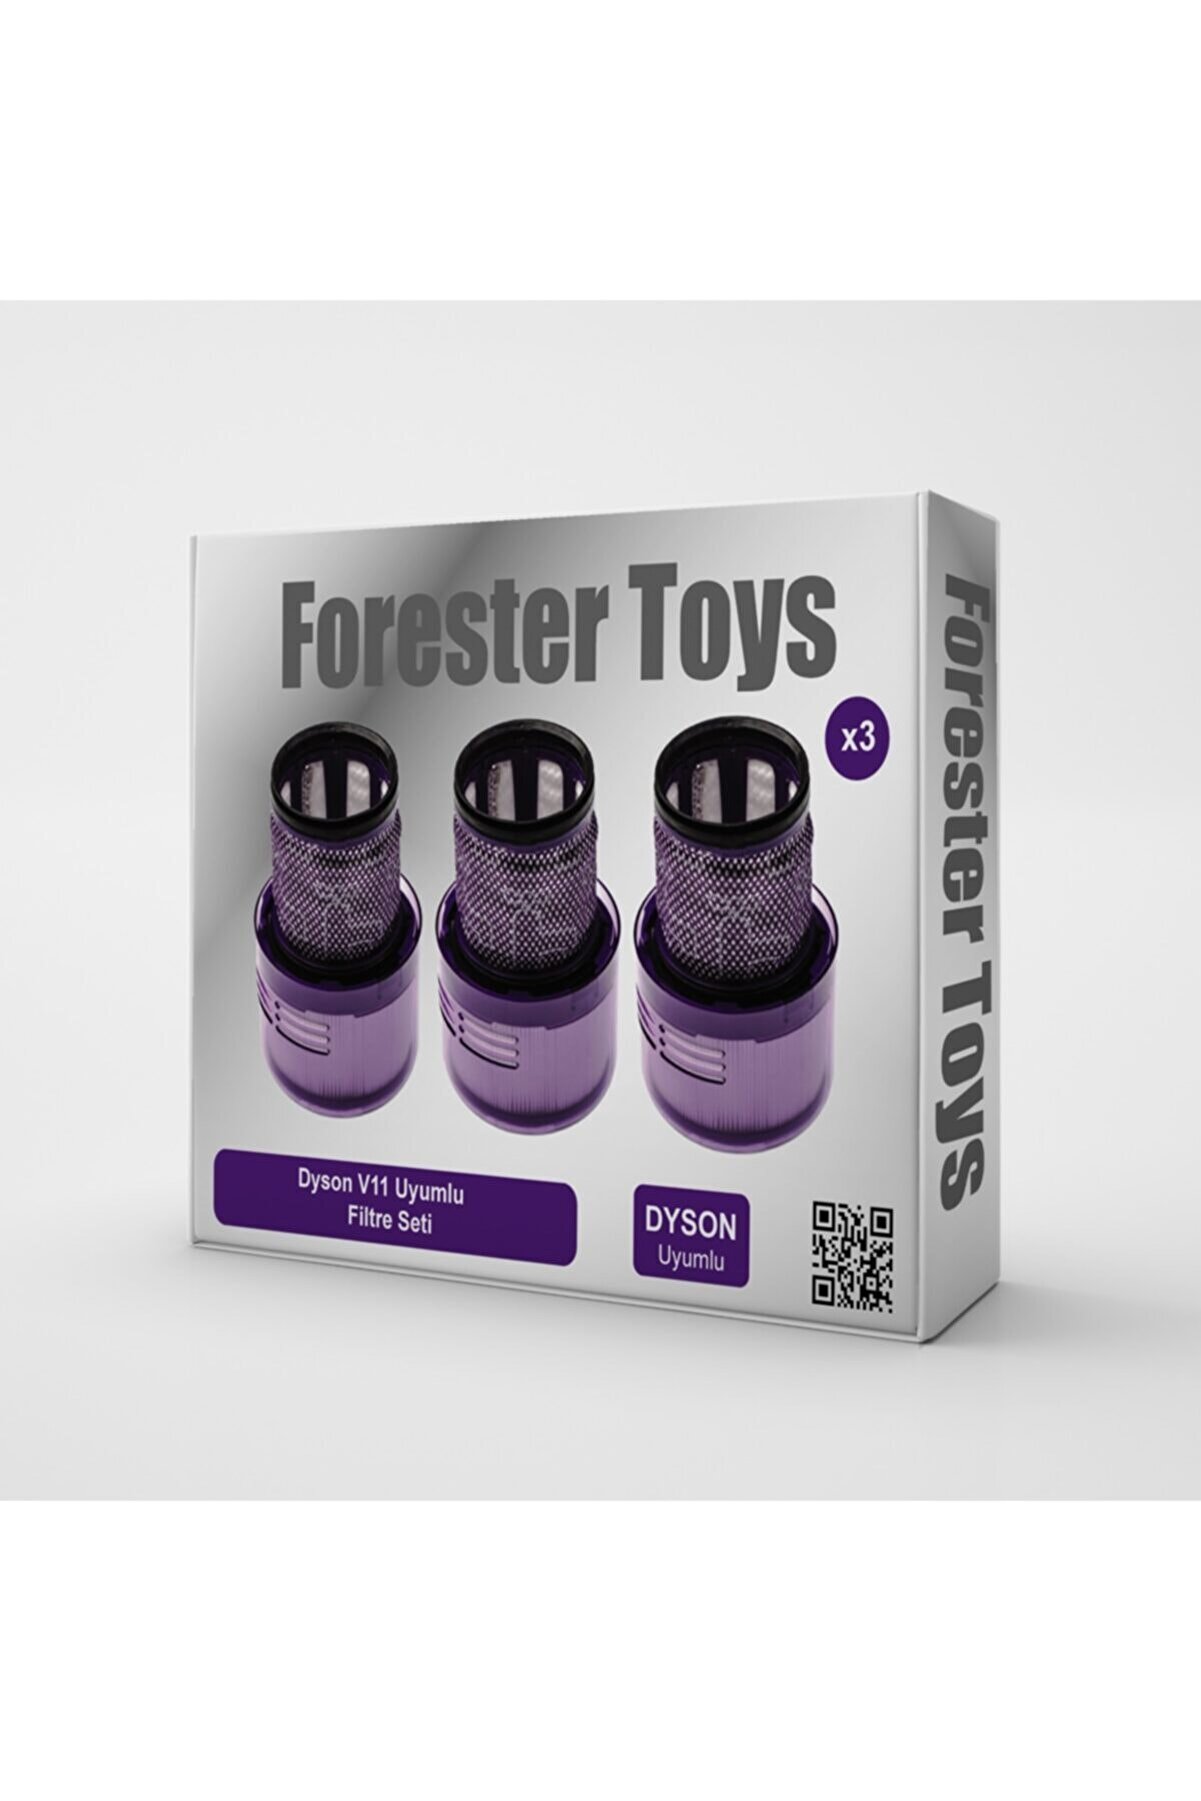 Forester Toys Dyson V11 Hepa Filtre